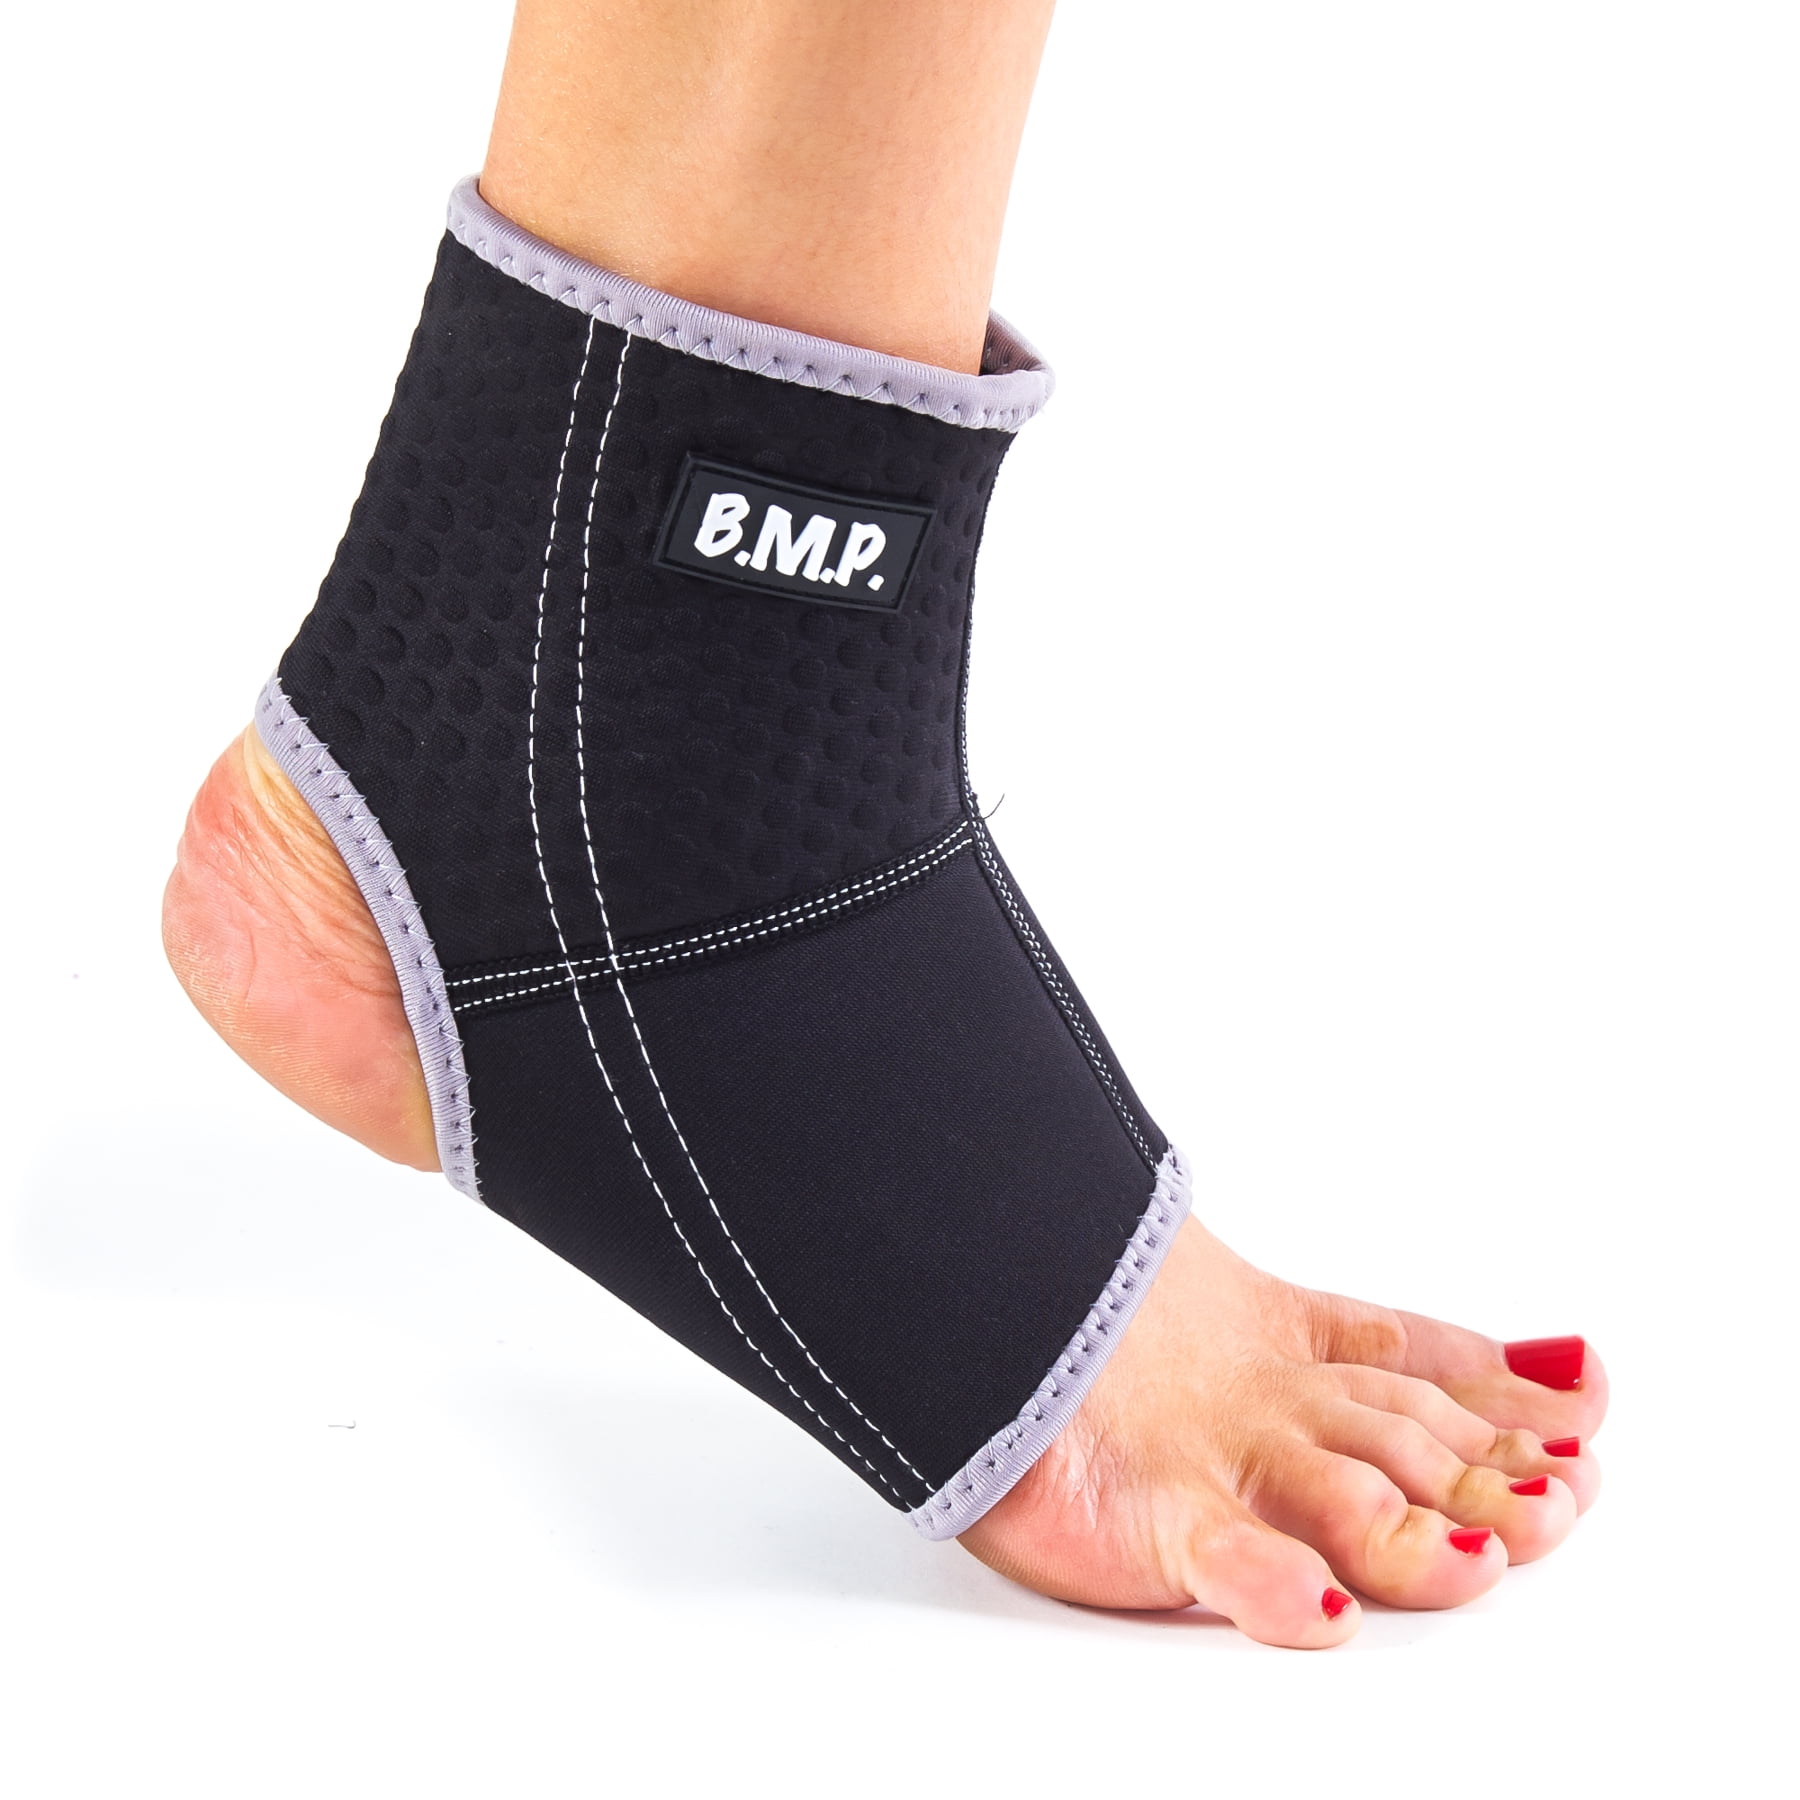 New Sports Ankle Support socks Neoprene Black Blend Provides Compression Sock 